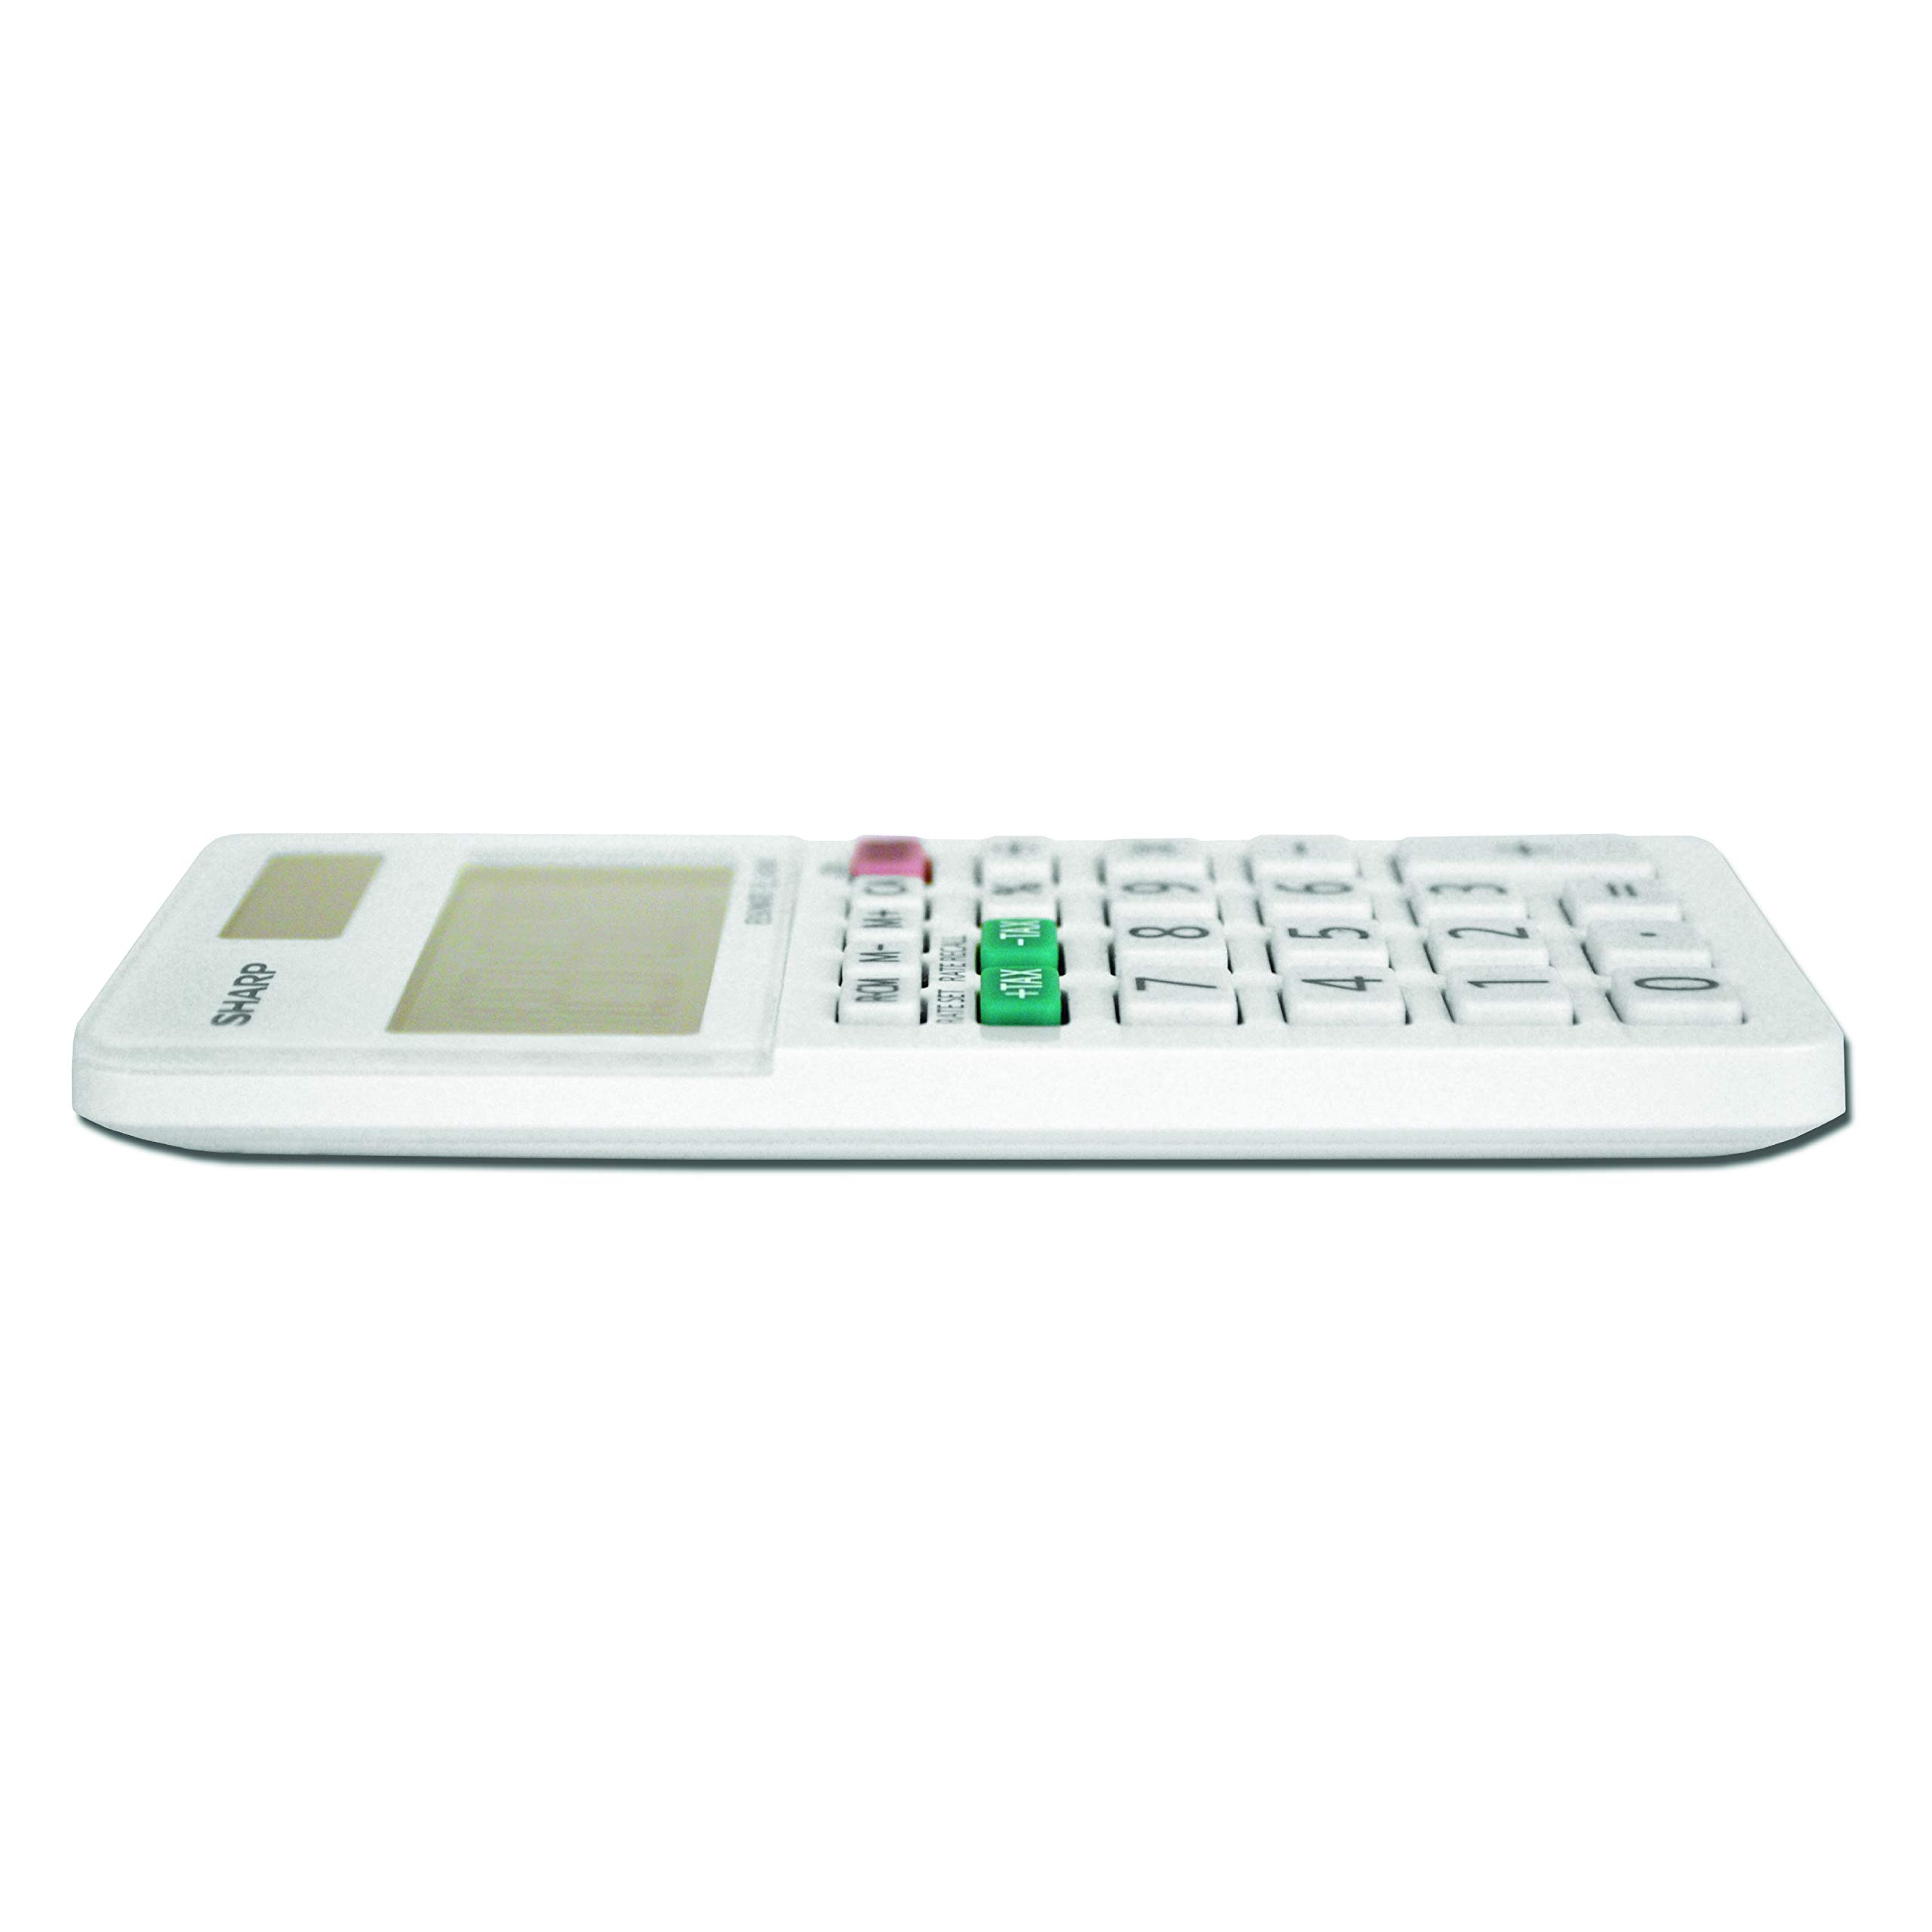 Sharp EL-244WB Business Calculator, White 2.125, 2.38 x 4.06 x 0.31 inches